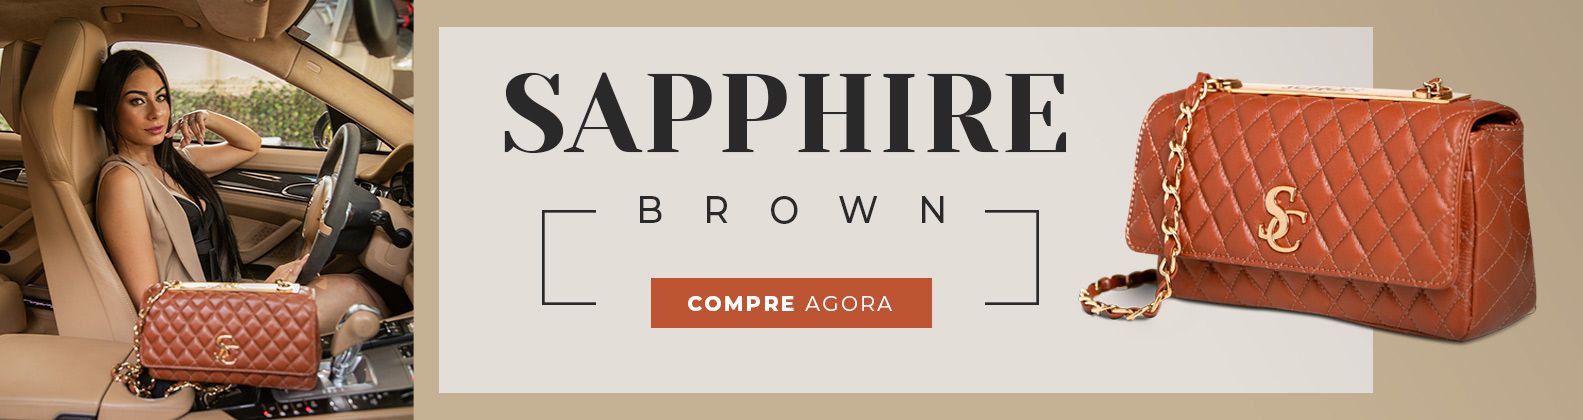 Sapphire Brown